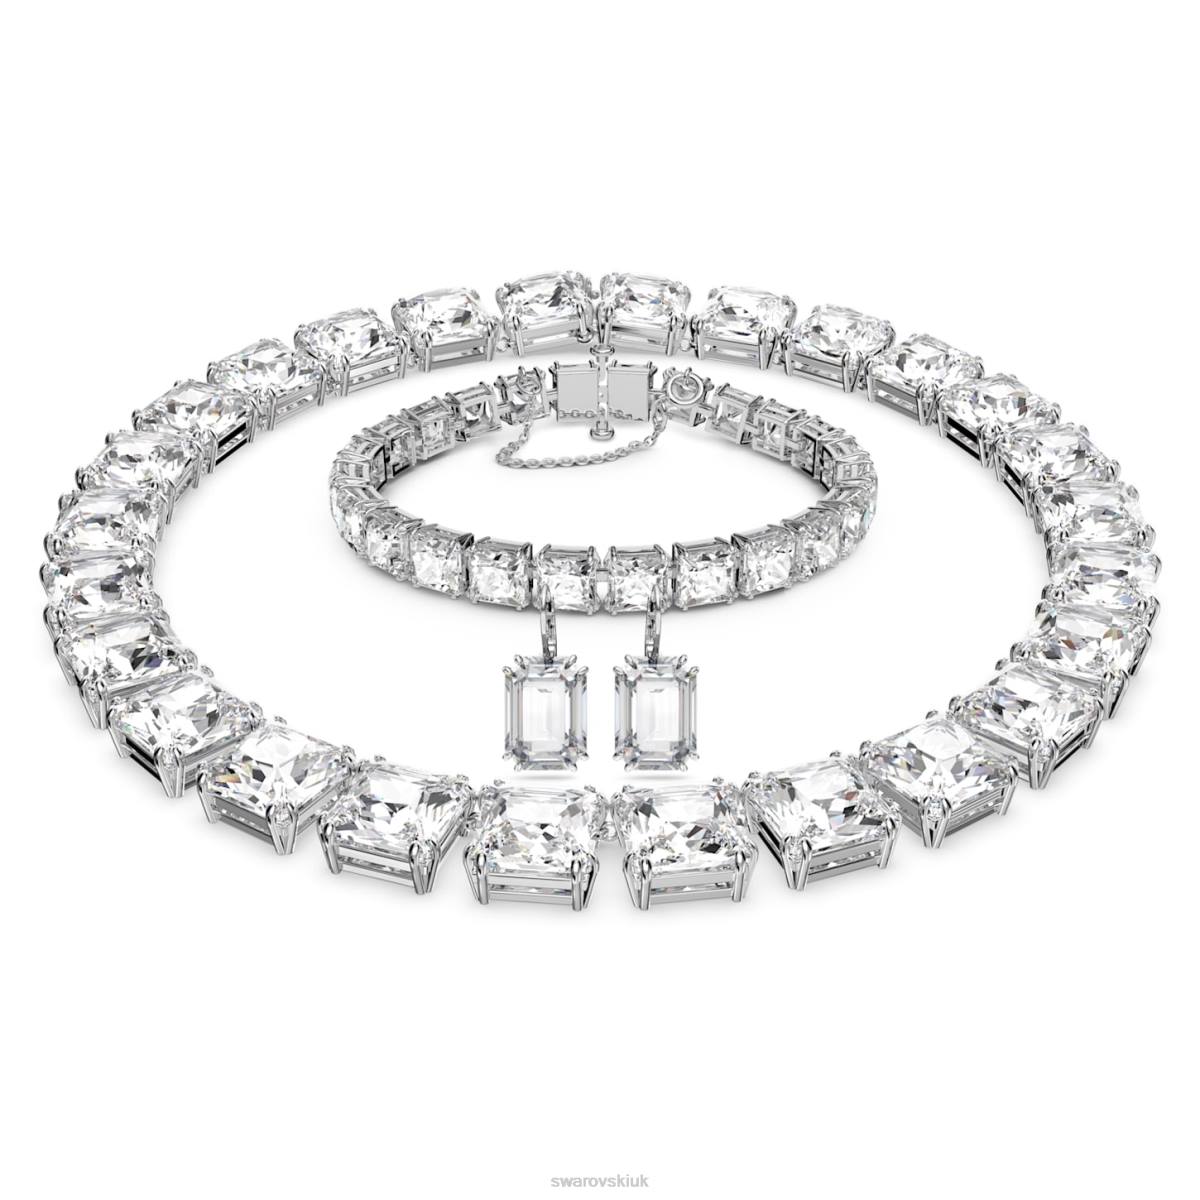 Jewelry Swarovski Millenia set Mixed cuts, White, Rhodium plated 48JX378